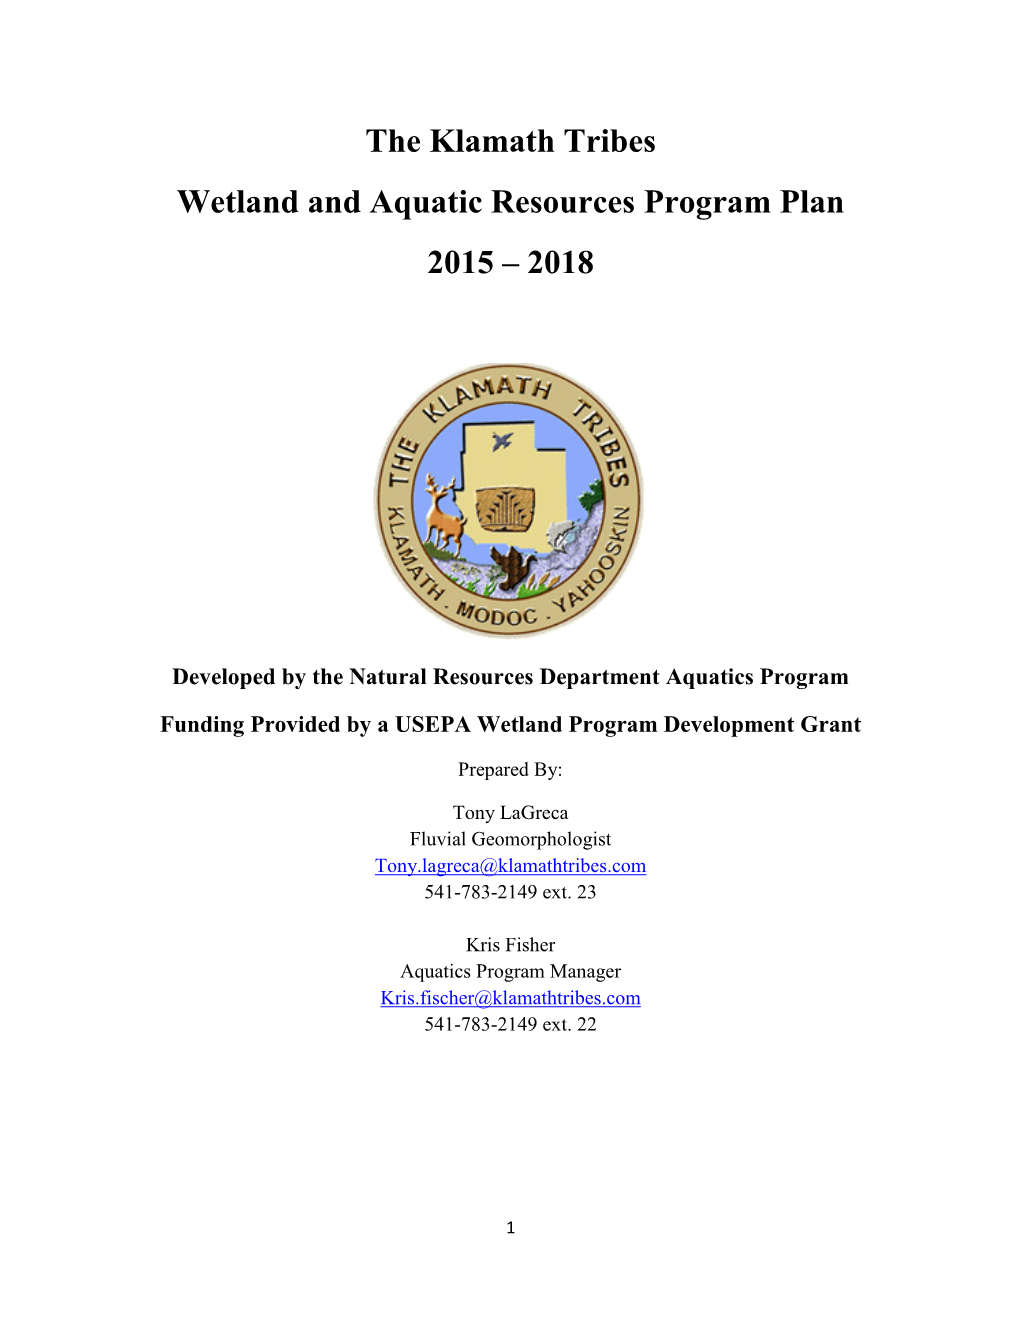 The Klamath Tribes Wetland and Aquatic Resources Program Plan 2015 – 2018